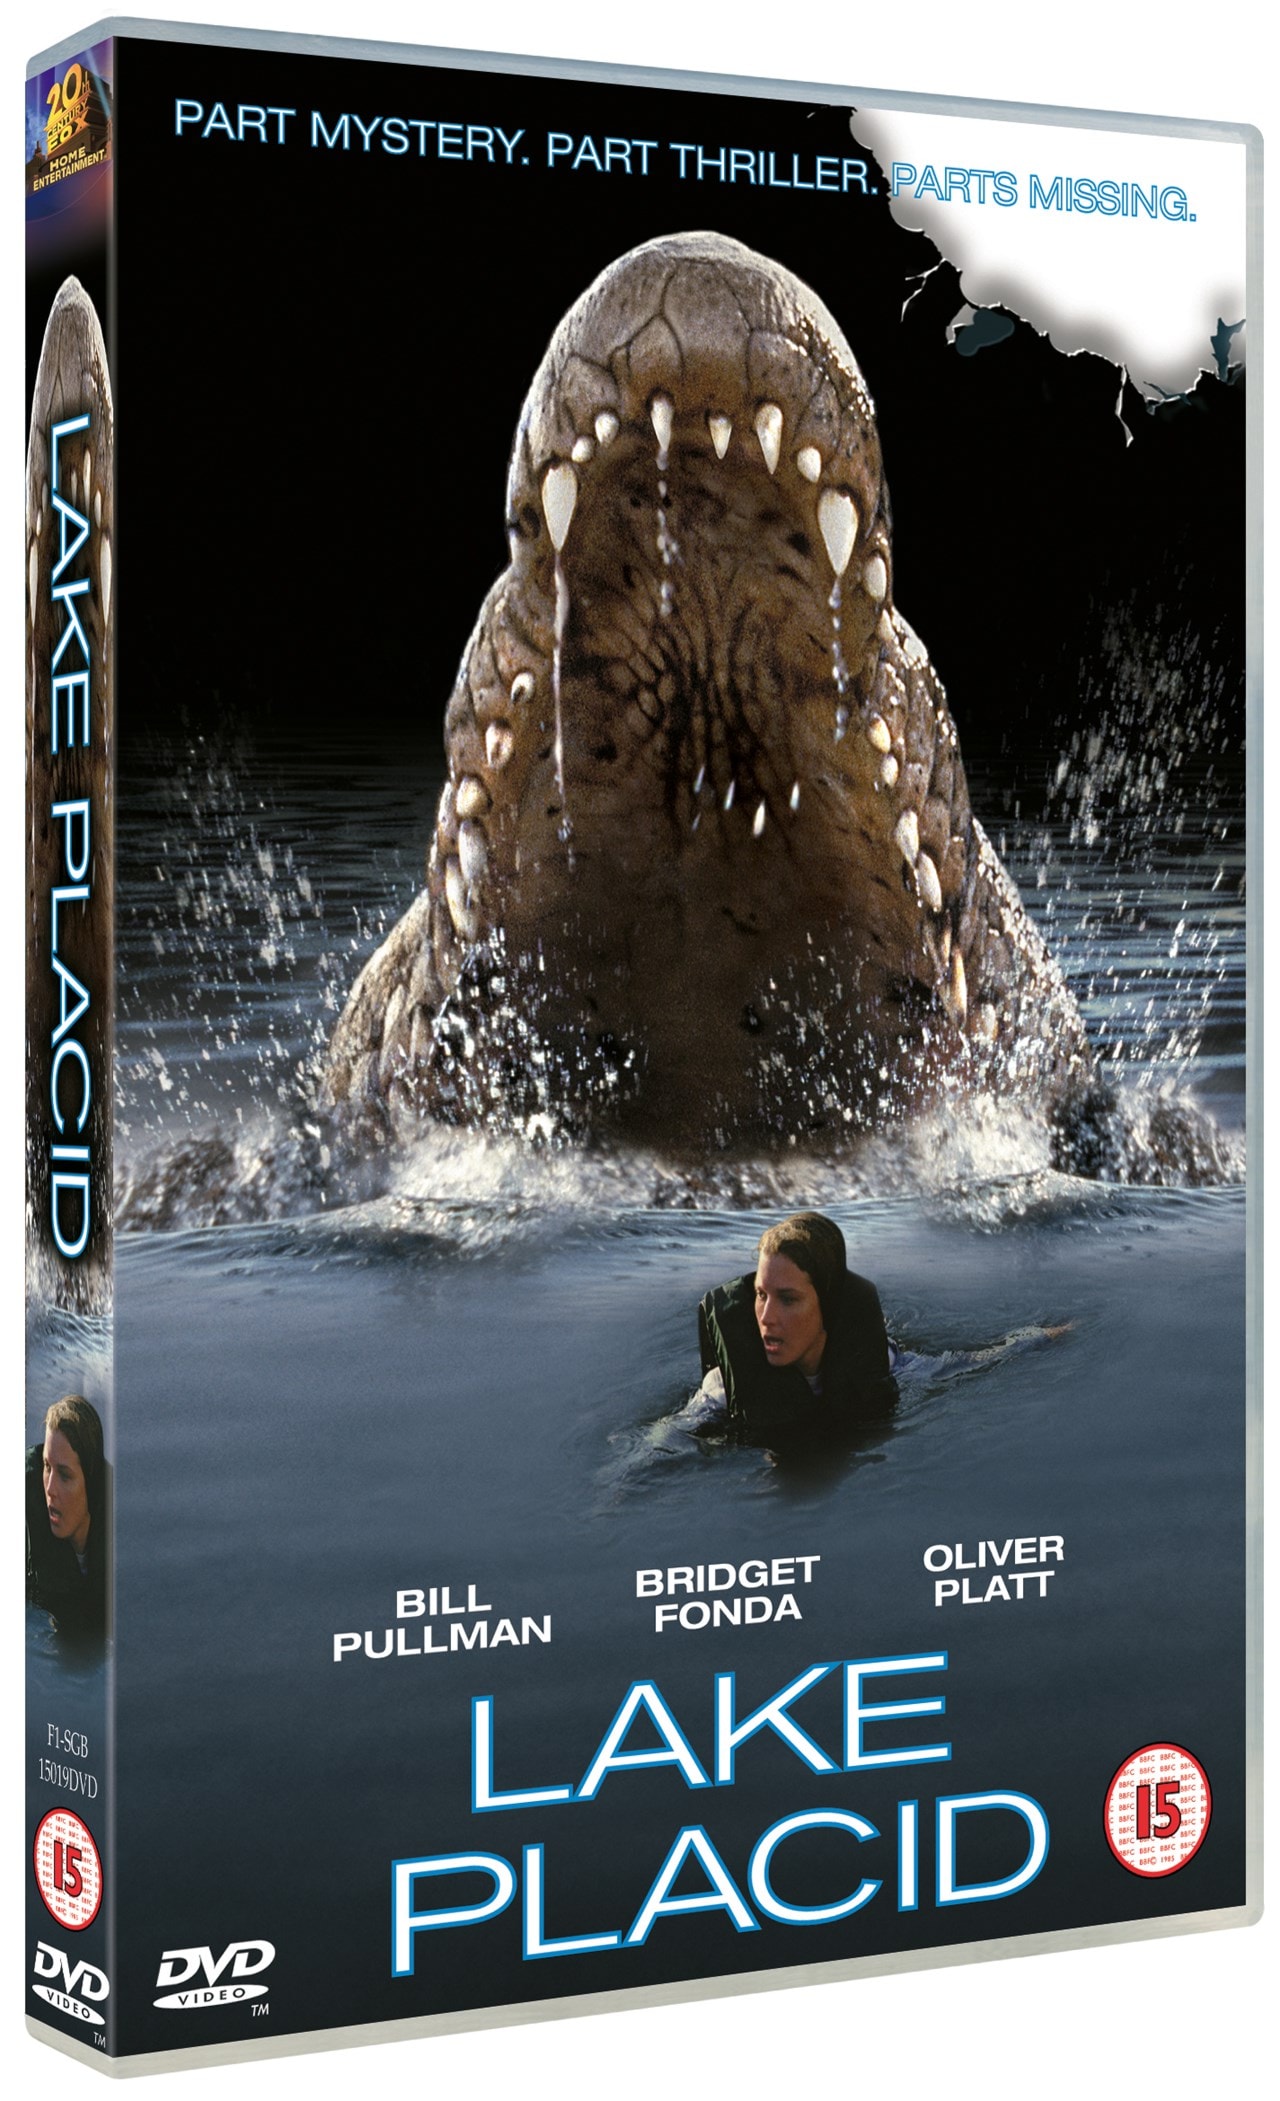 Lake Placid | DVD | Free shipping over £20 | HMV Store